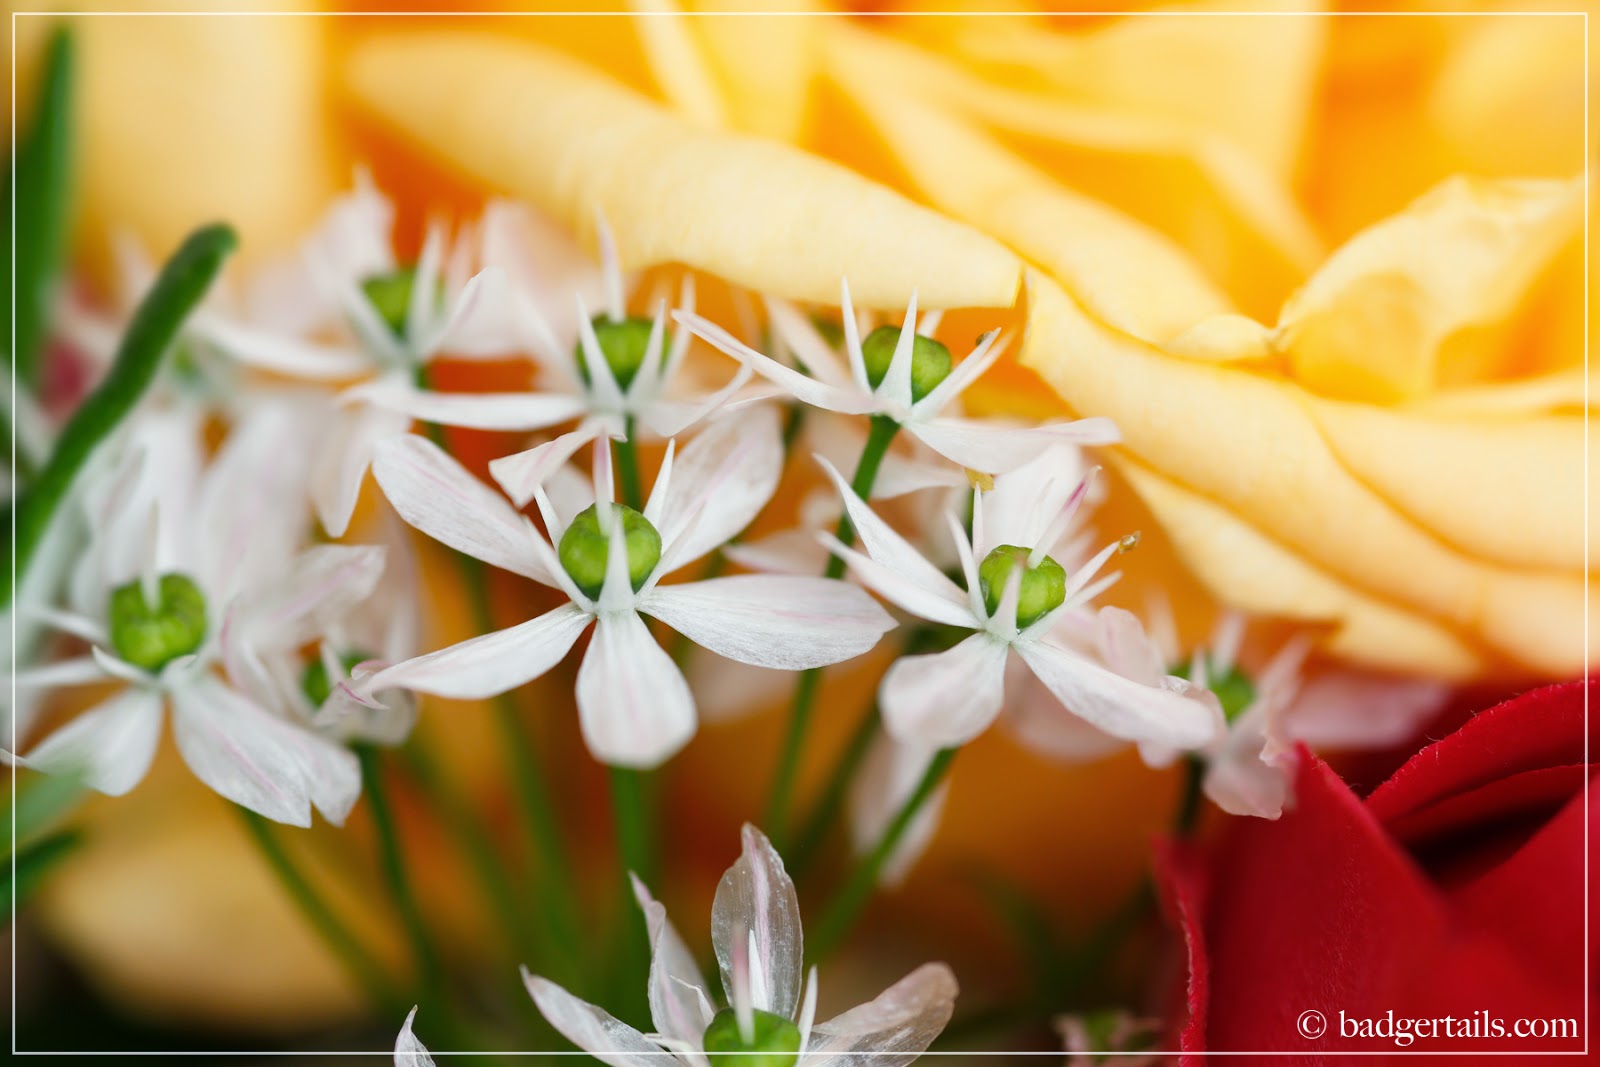 Badgertails ~ Homemaker: Pink and Orange Roses in White Urn